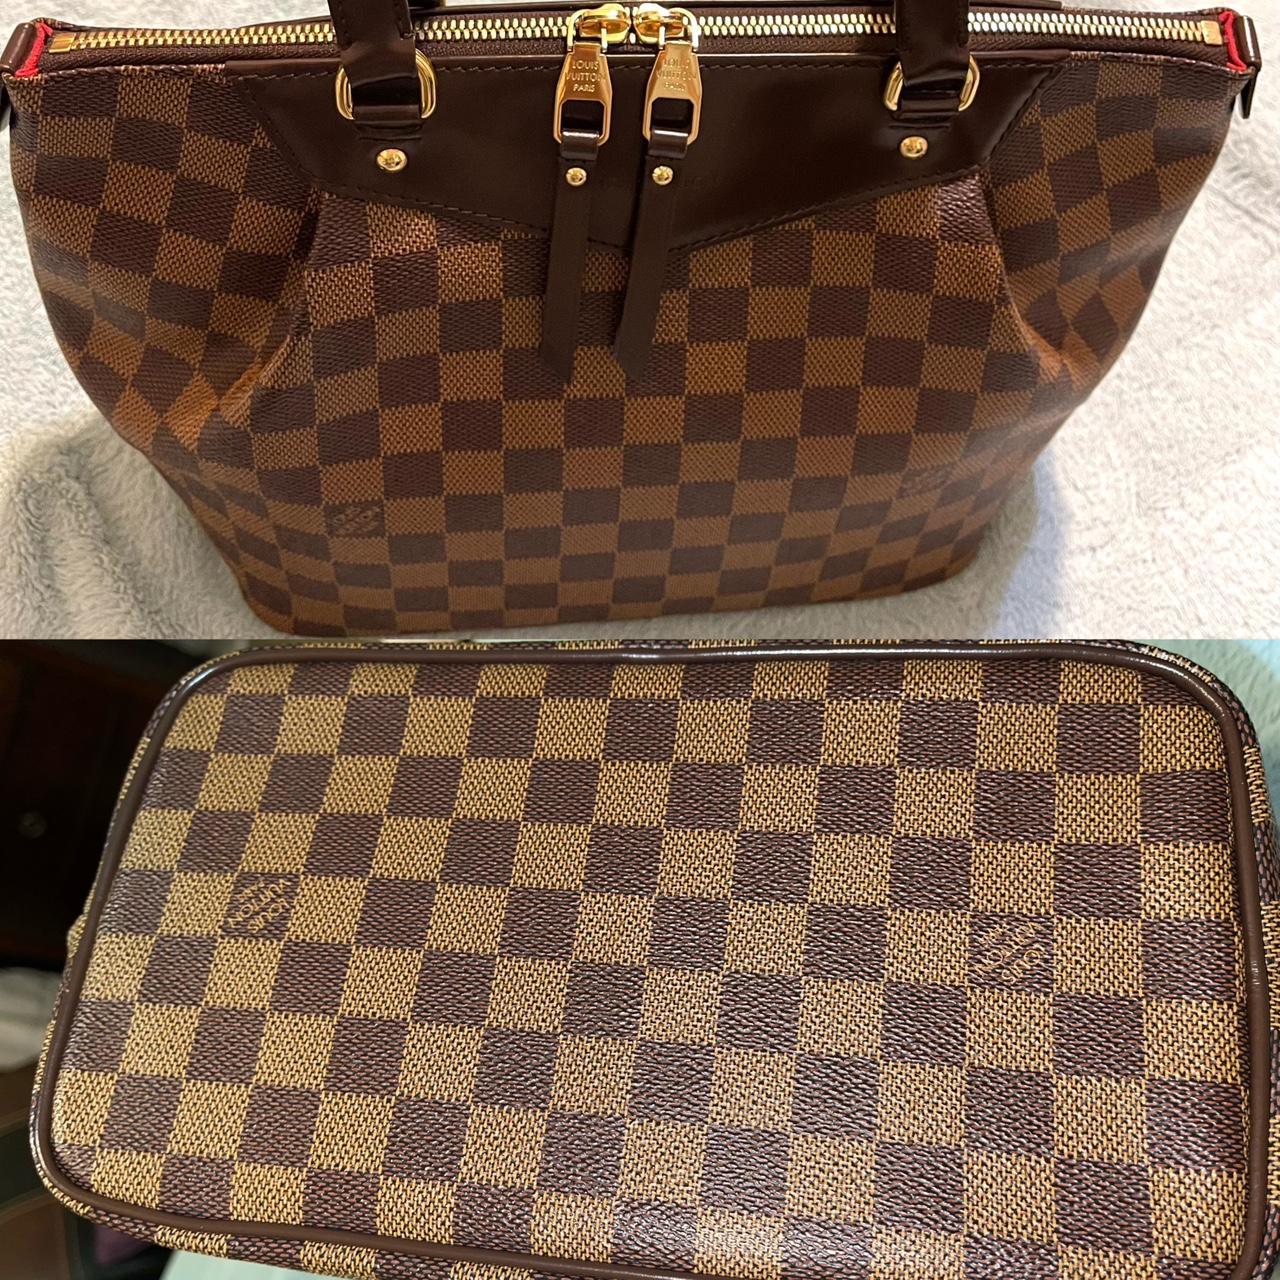 handbags#louisvuitton #fake#authenthic #luxurybag